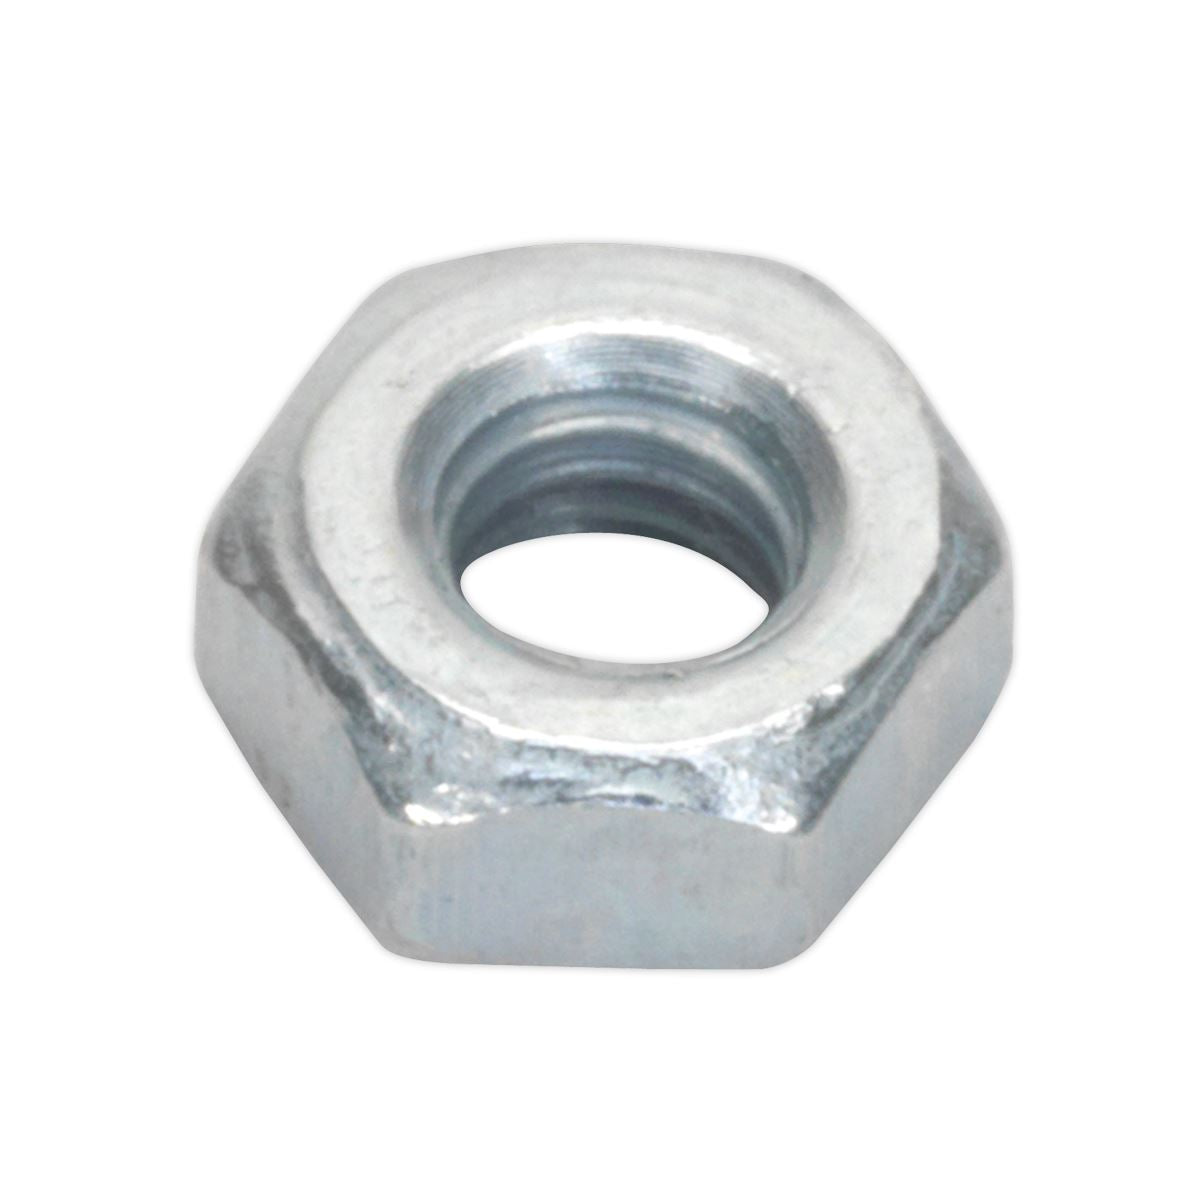 Sealey Steel Nut DIN 934 - M3- Pack of 100